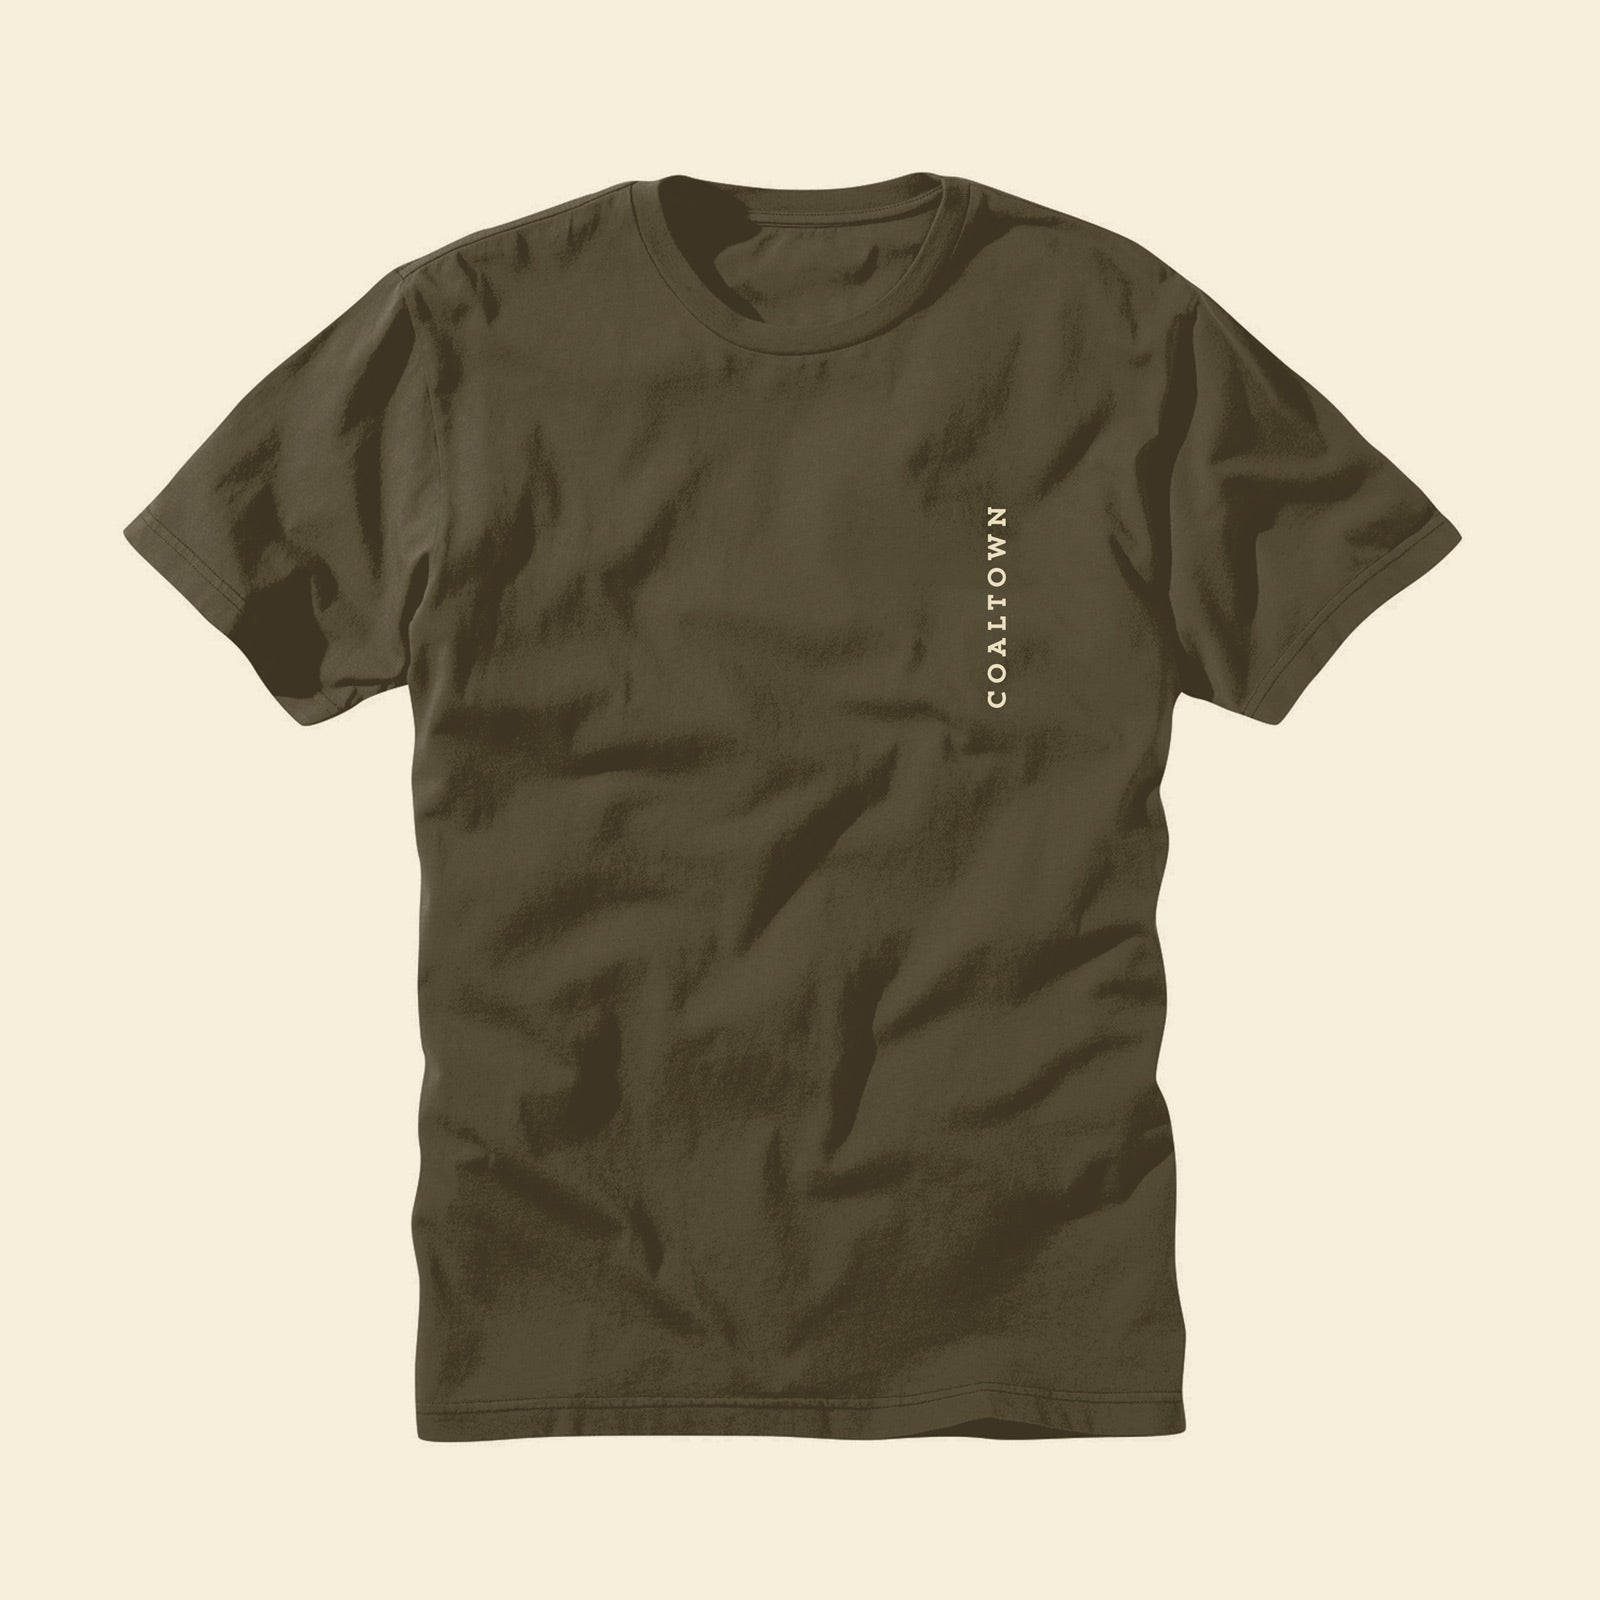 The Union Coaltown T-Shirt